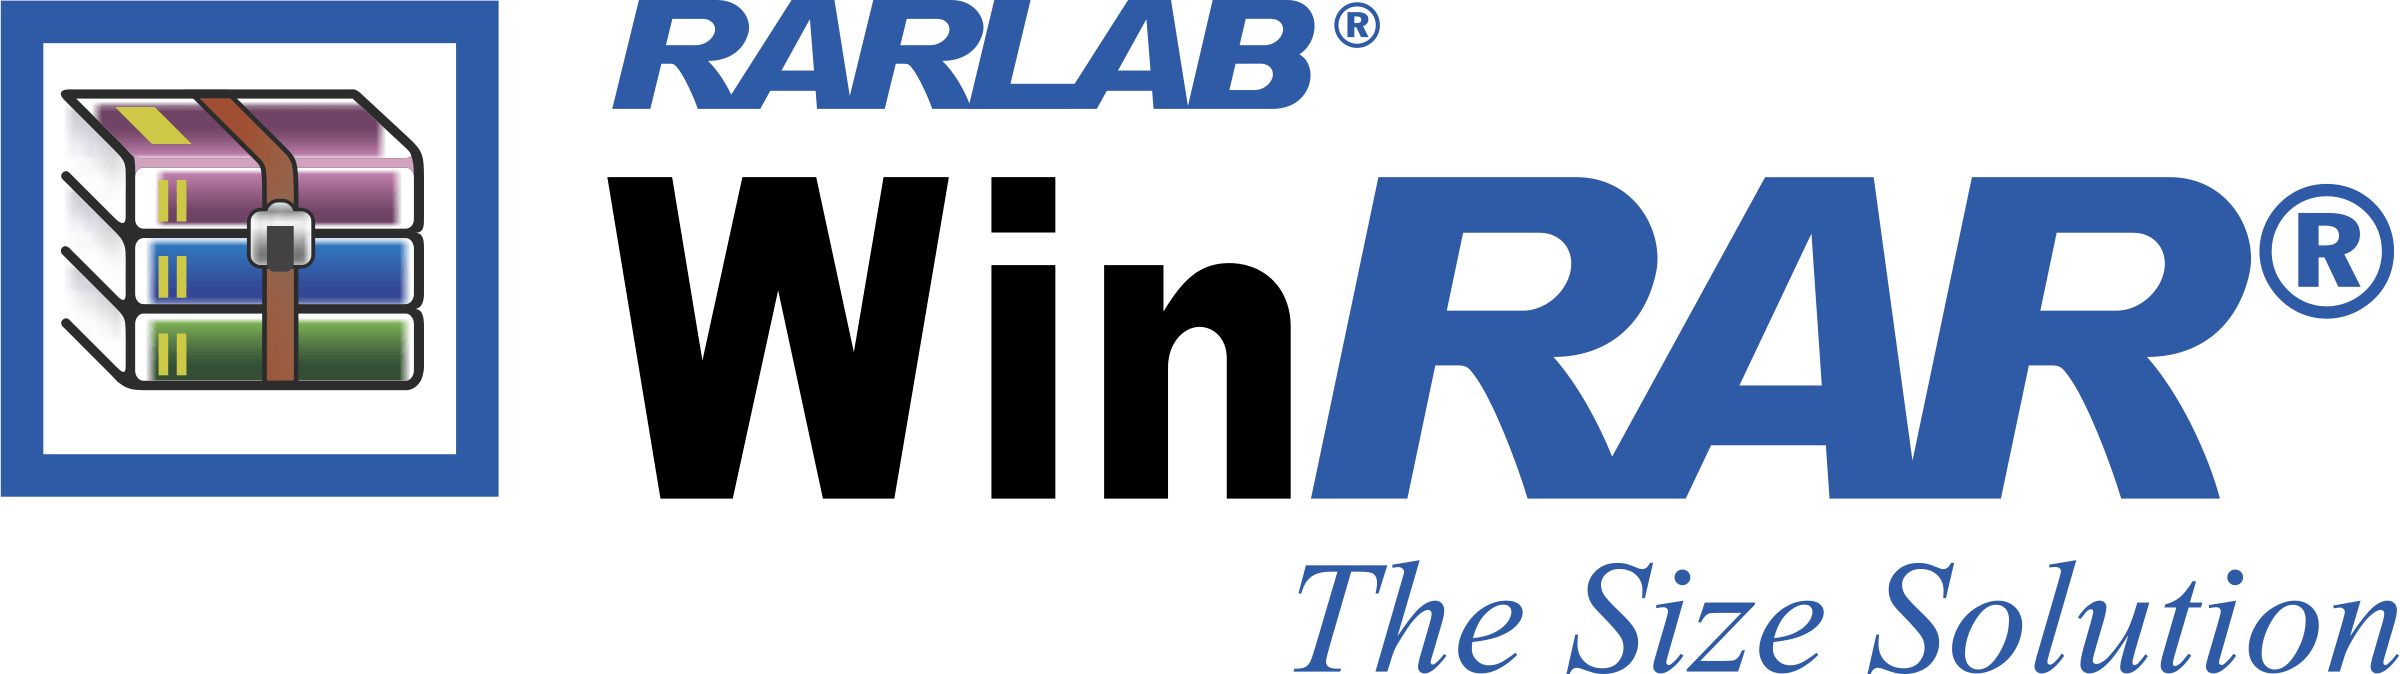 winRAR Logo - WinRAR Logo PNG Transparent & SVG Vector